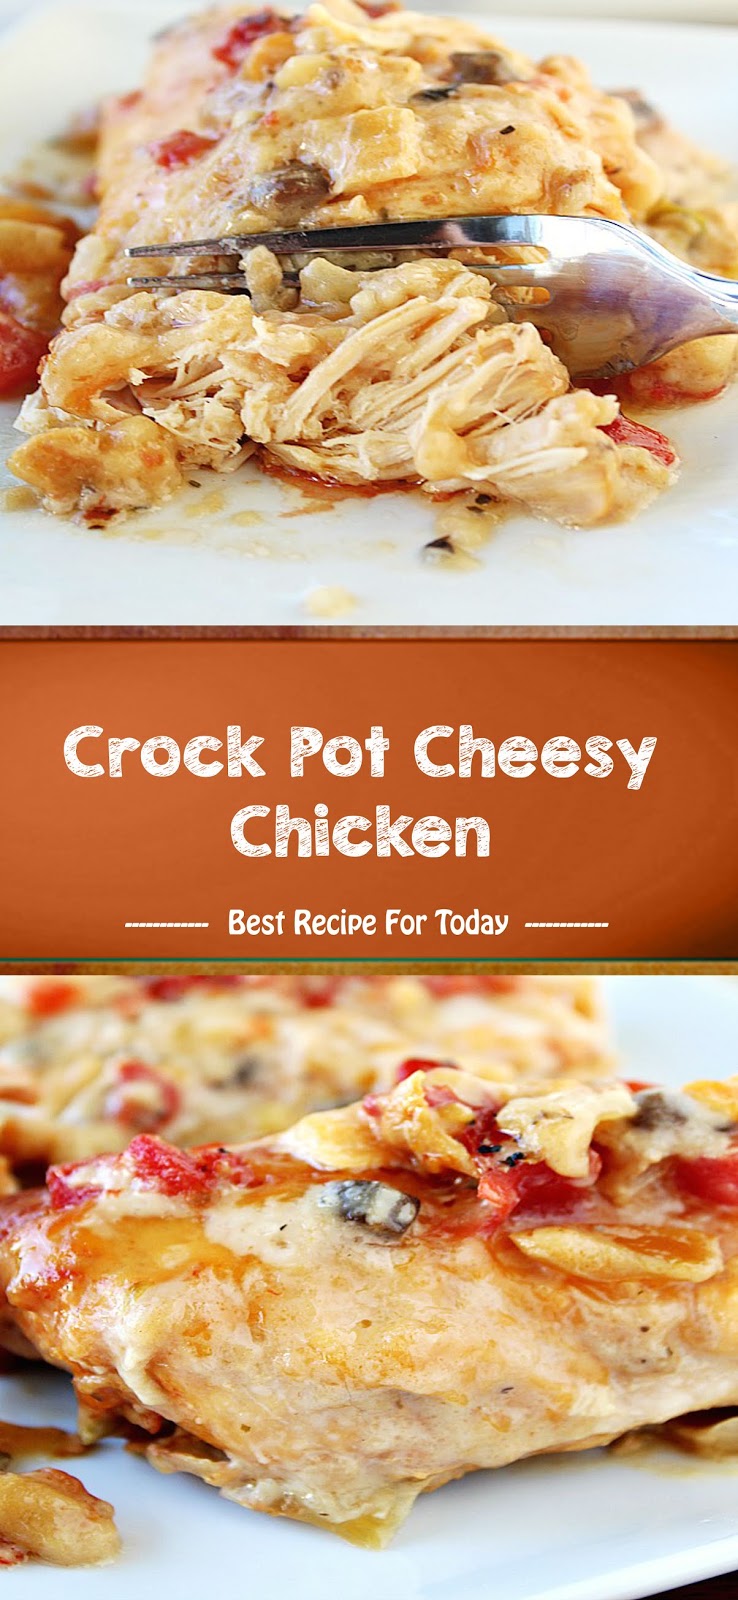 Crock Pot Cheesy Chicken - Health Fitness Tips